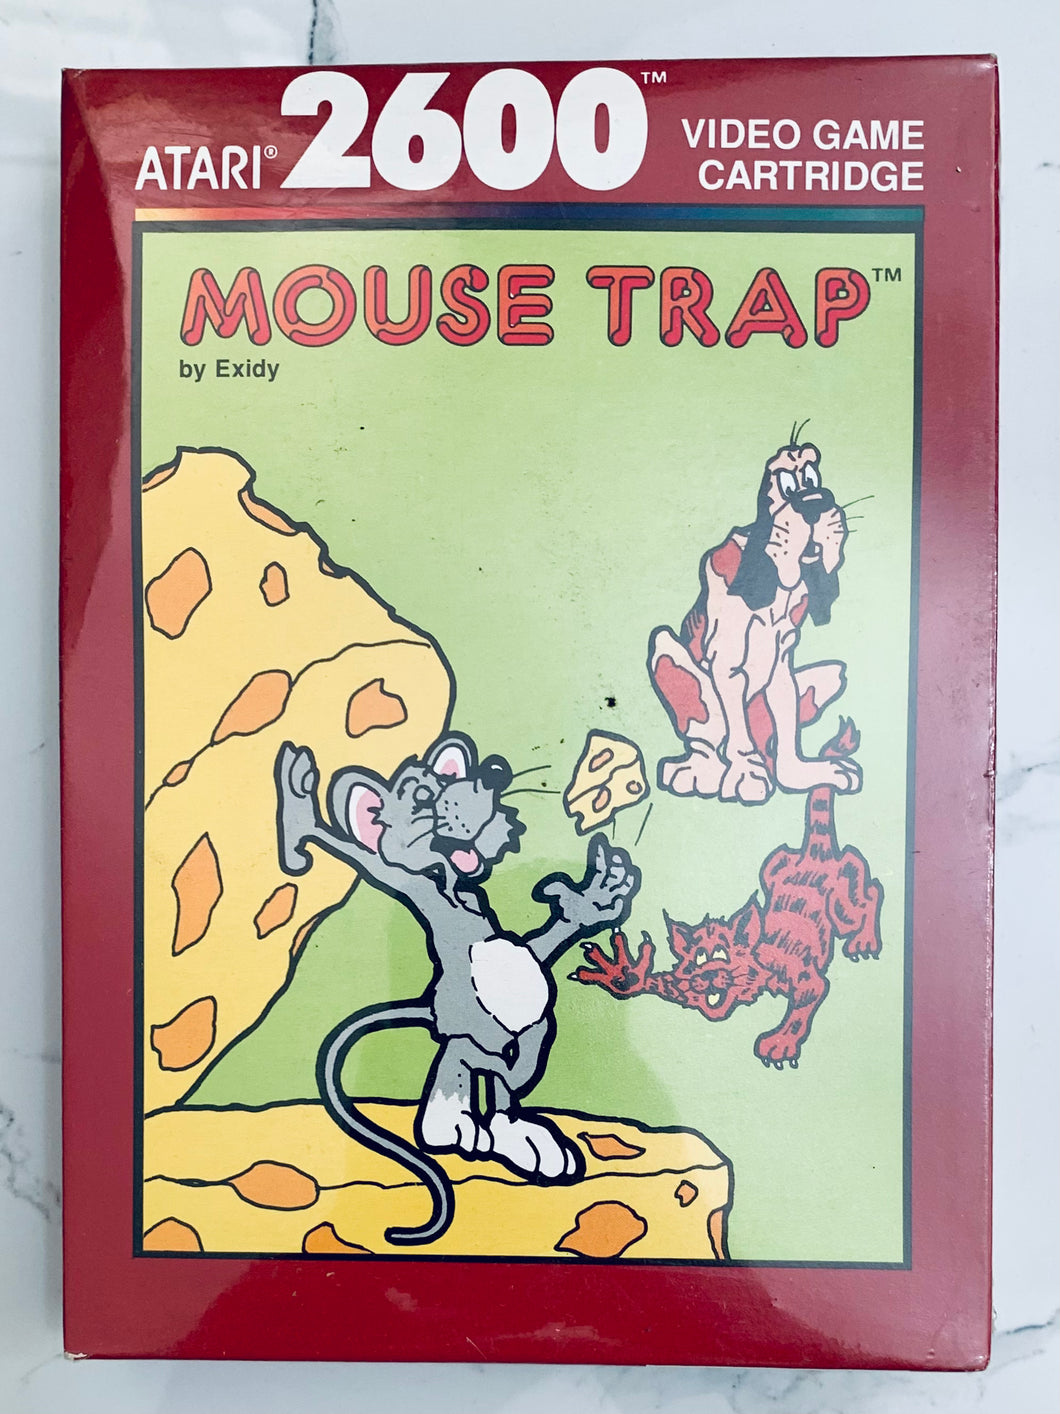 Mouse Trap - Atari VCS 2600 - NTSC - Brand New